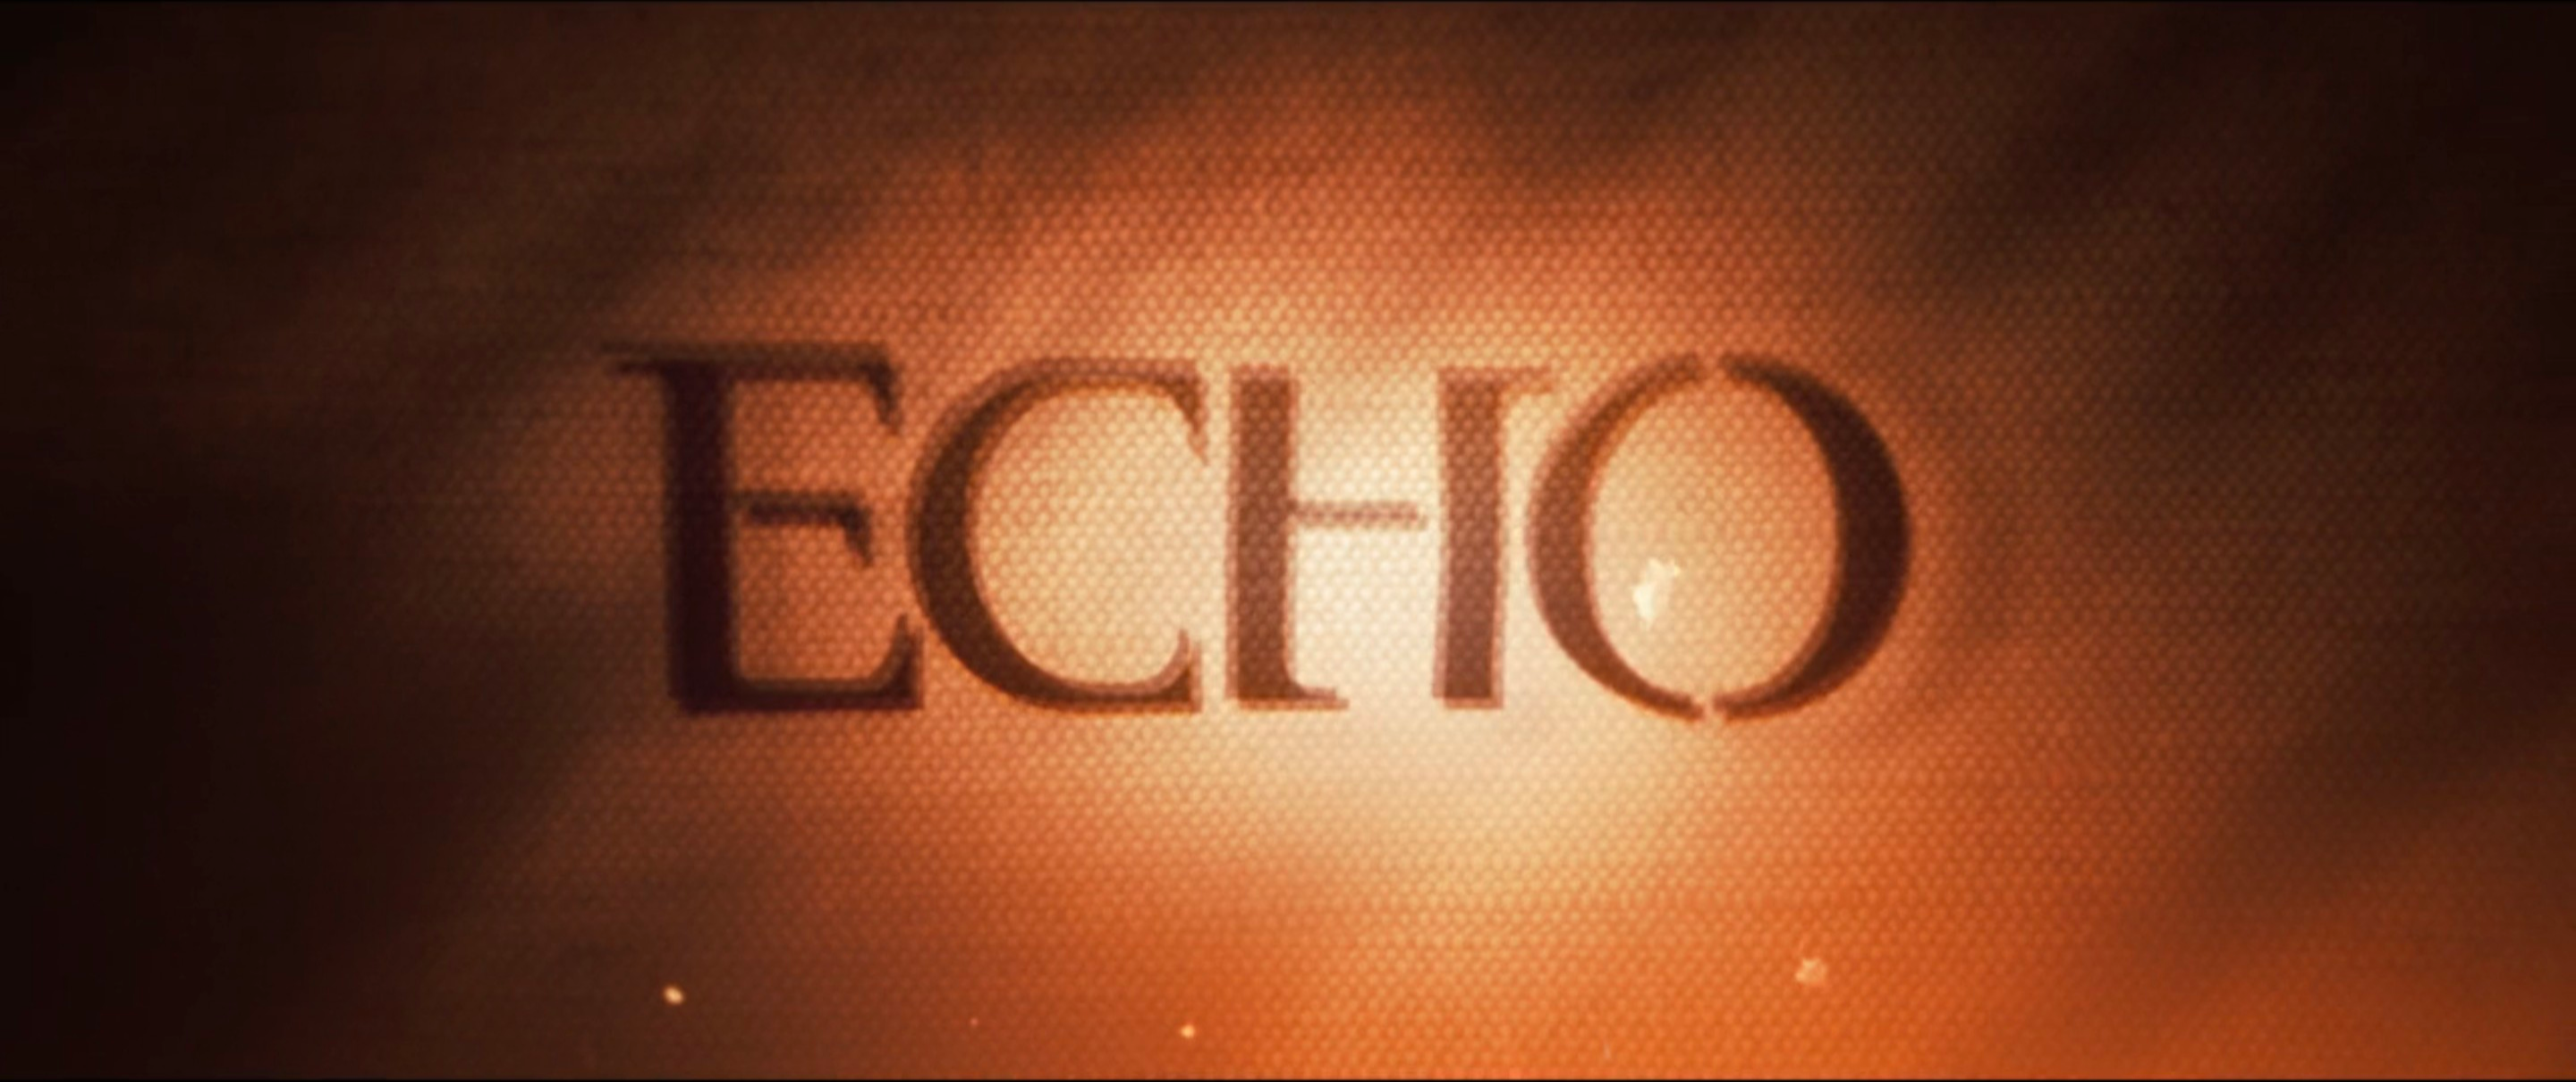 Echo Show - Wikipedia